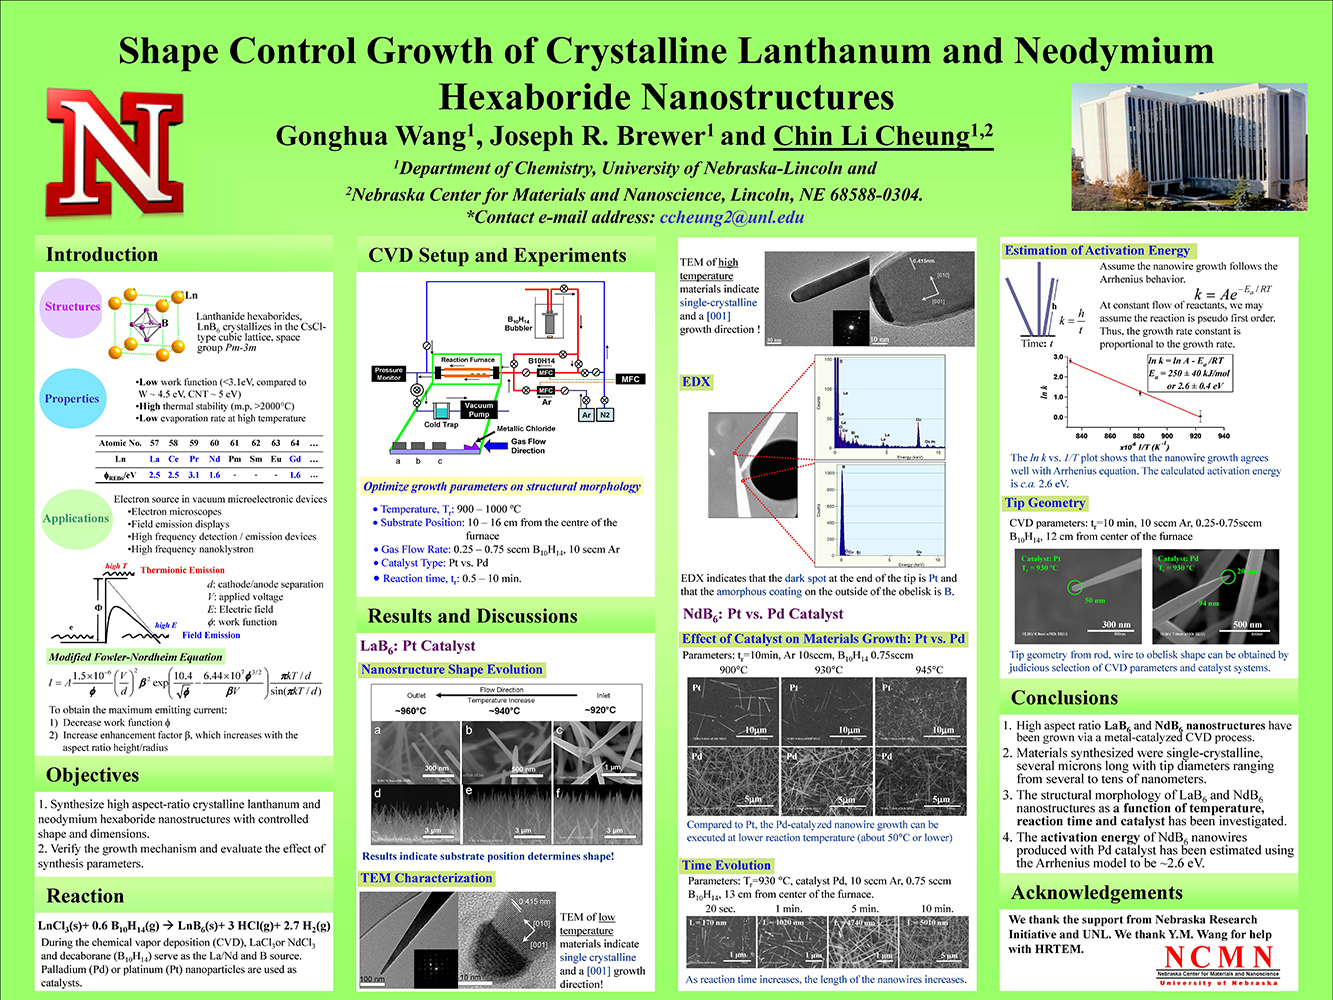 Shape Control Growth of Crystalline Lanthanum and Neodymium Hexaboride Nanostructures